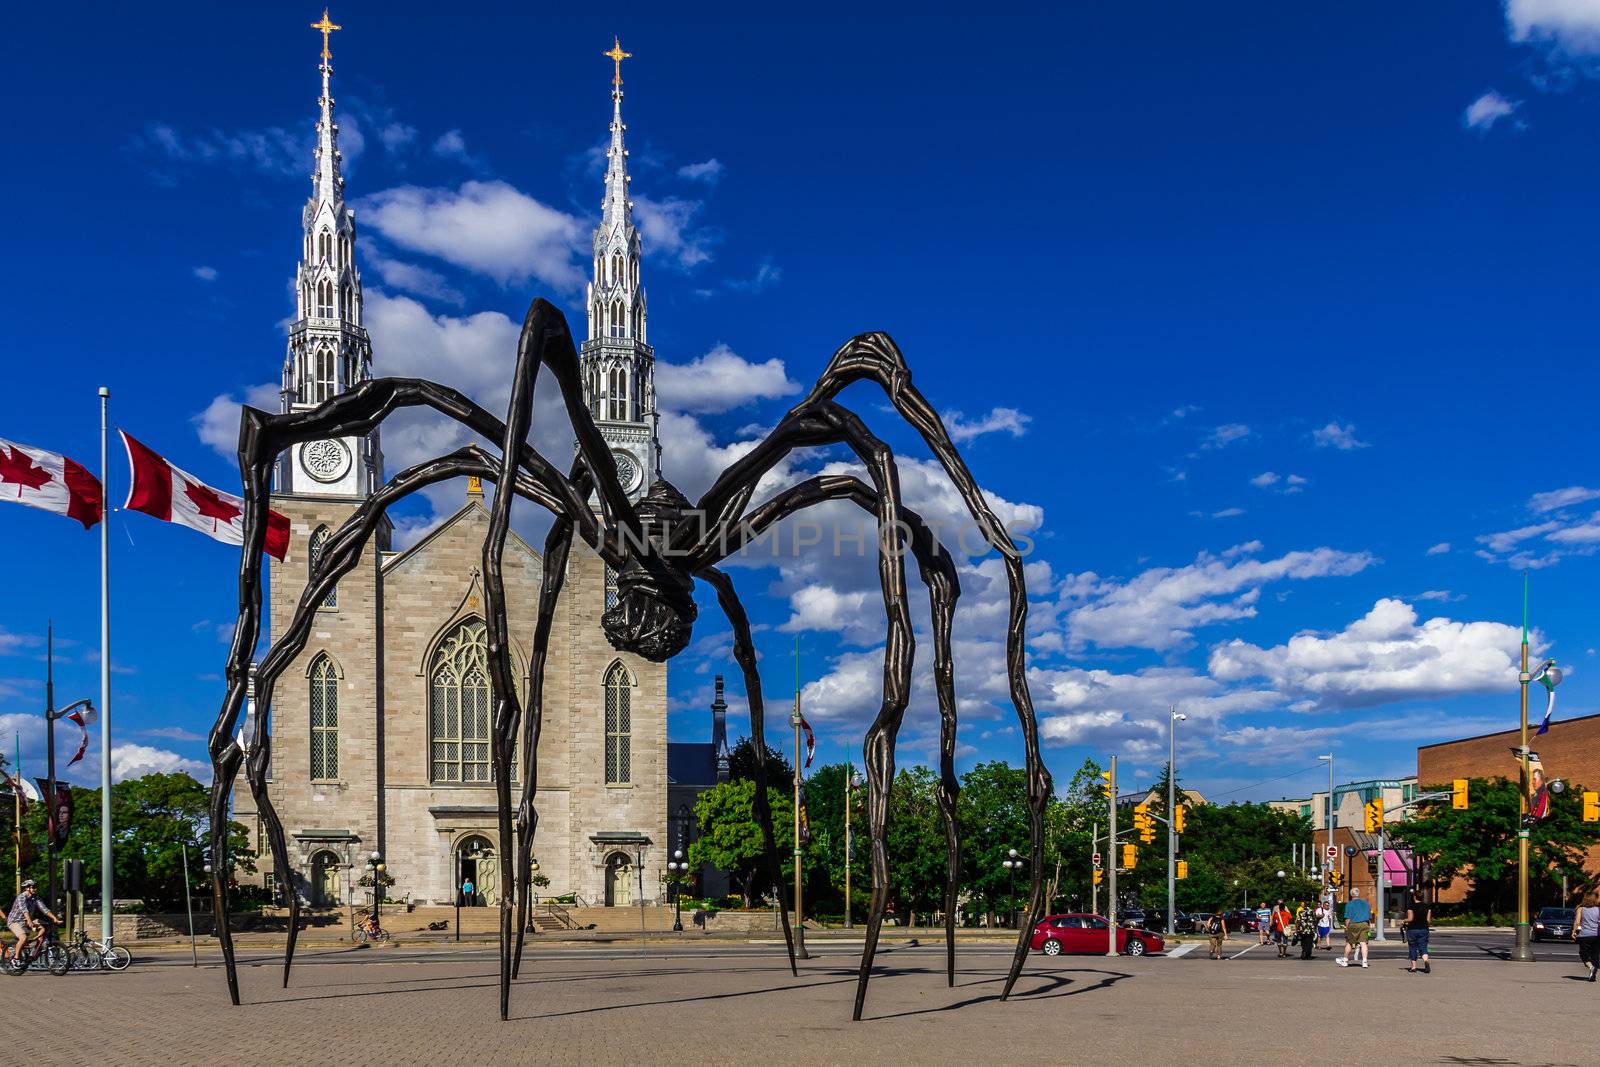 Maman spider sculpture on the Basilica church background, Ontario, Canada